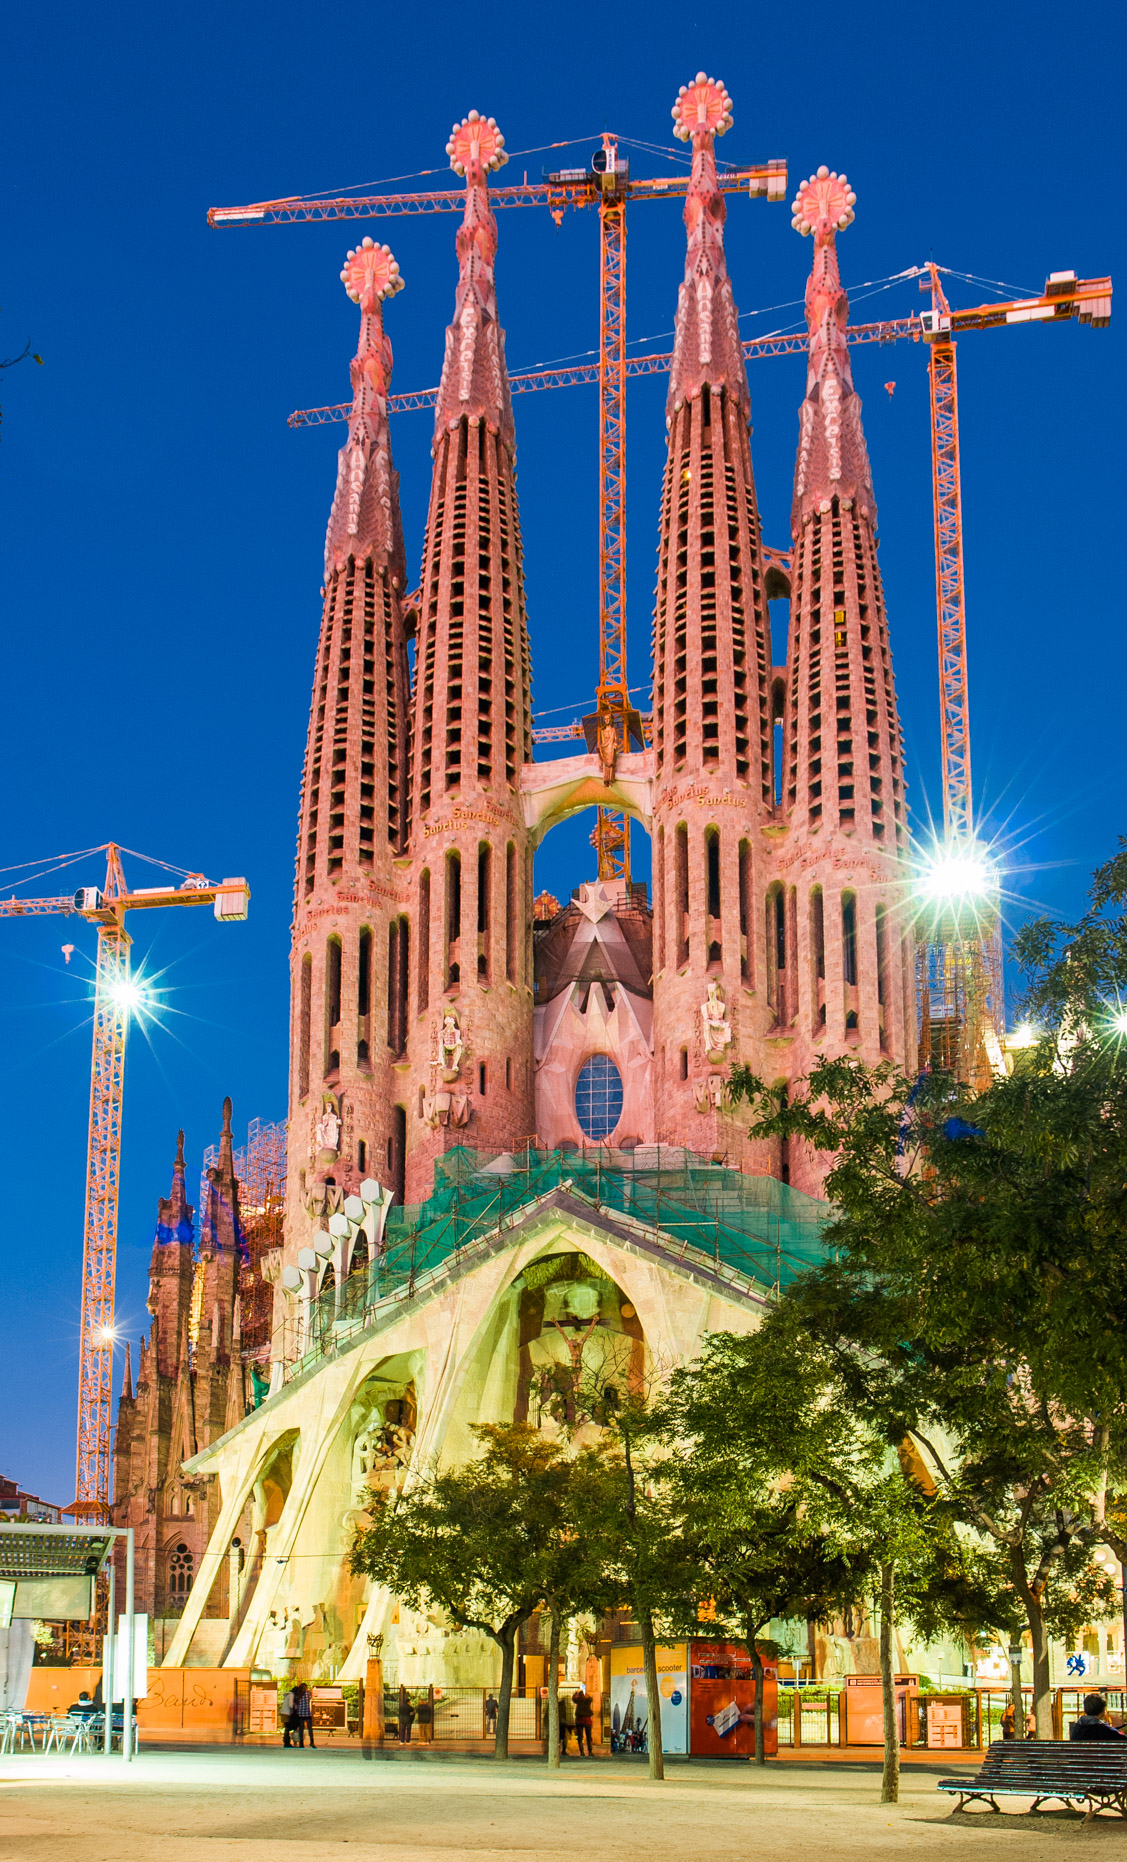 Sagrada Familia Photo Gallery